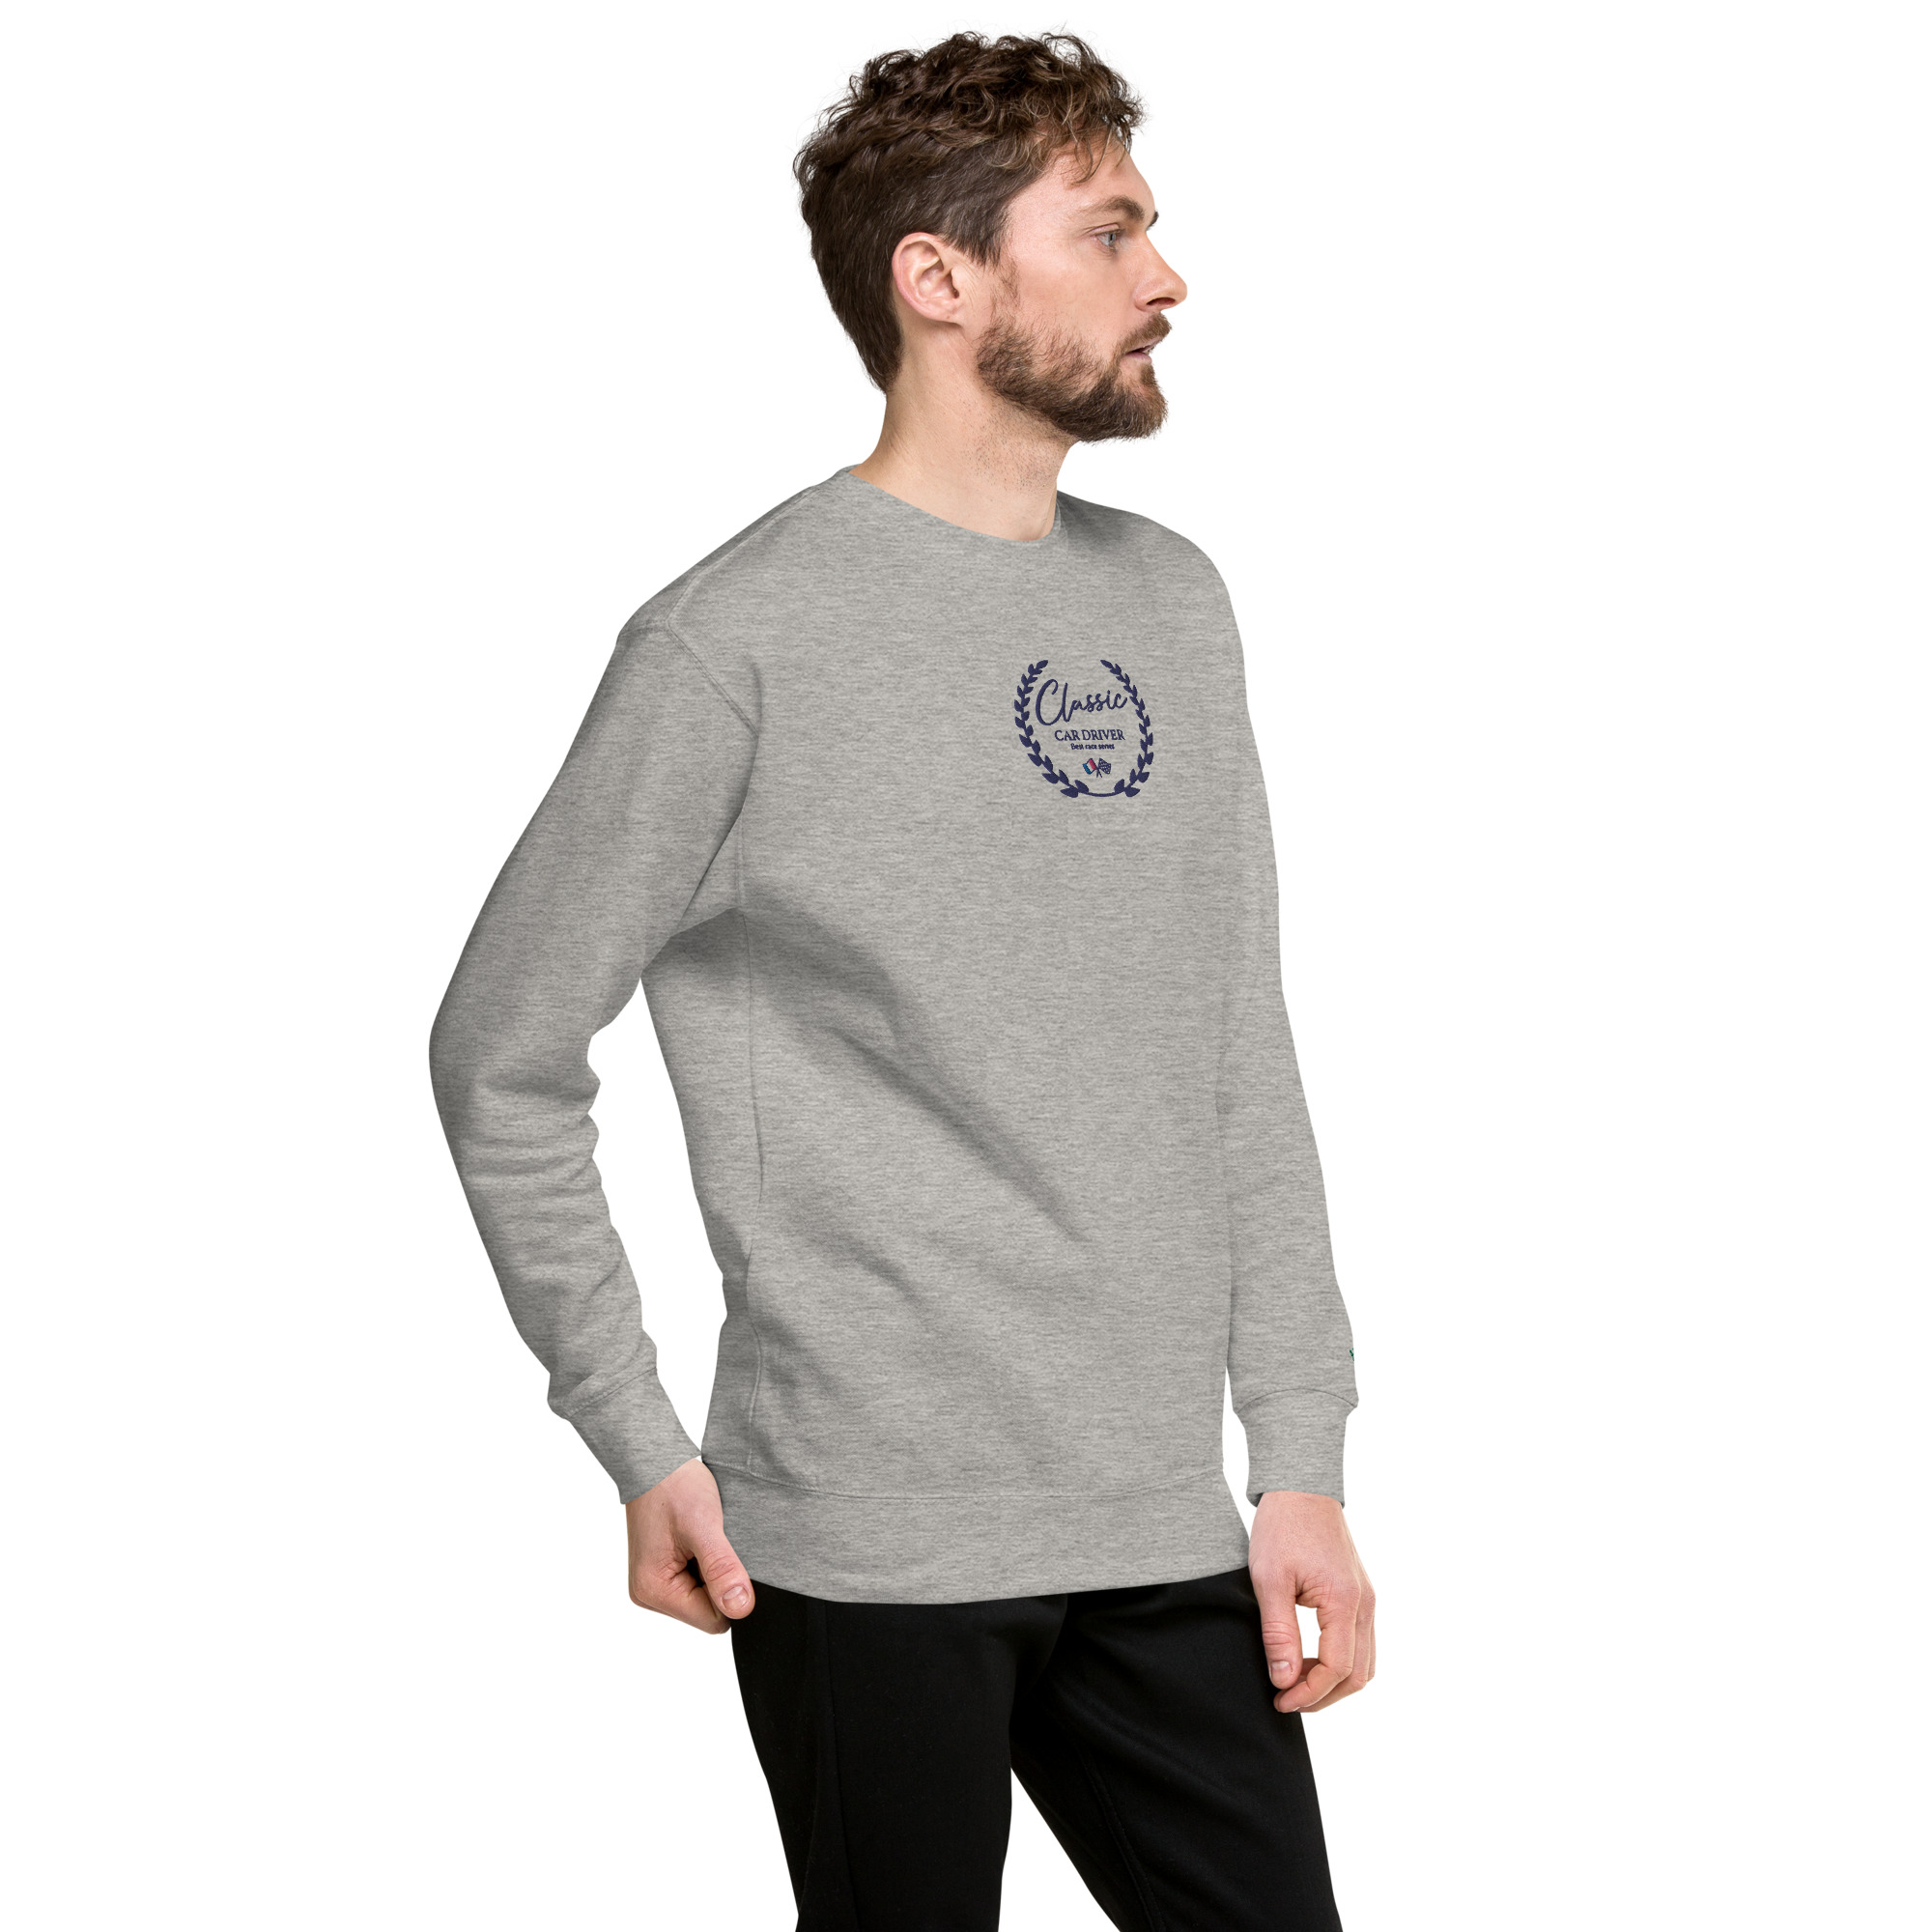 unisex-premium-sweatshirt-carbon-grey-right-front-63f12f0566112.jpg